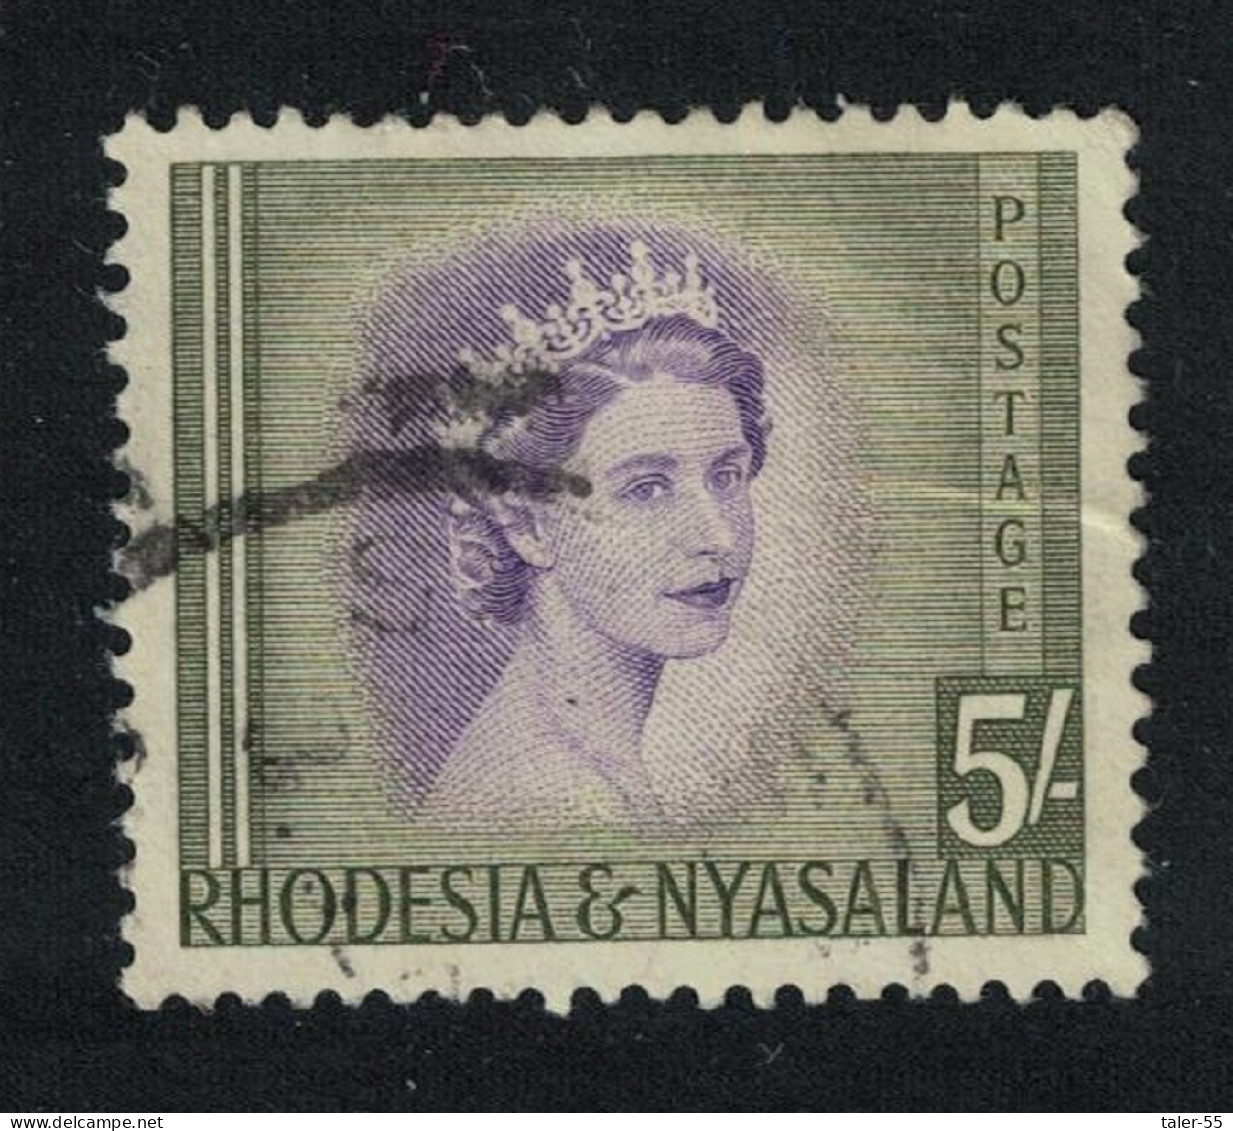 Rhodesia And Nyassa Queen Elizabeth II 5Sh 1954 Canc SG#13 - Rhodesien & Nyasaland (1954-1963)